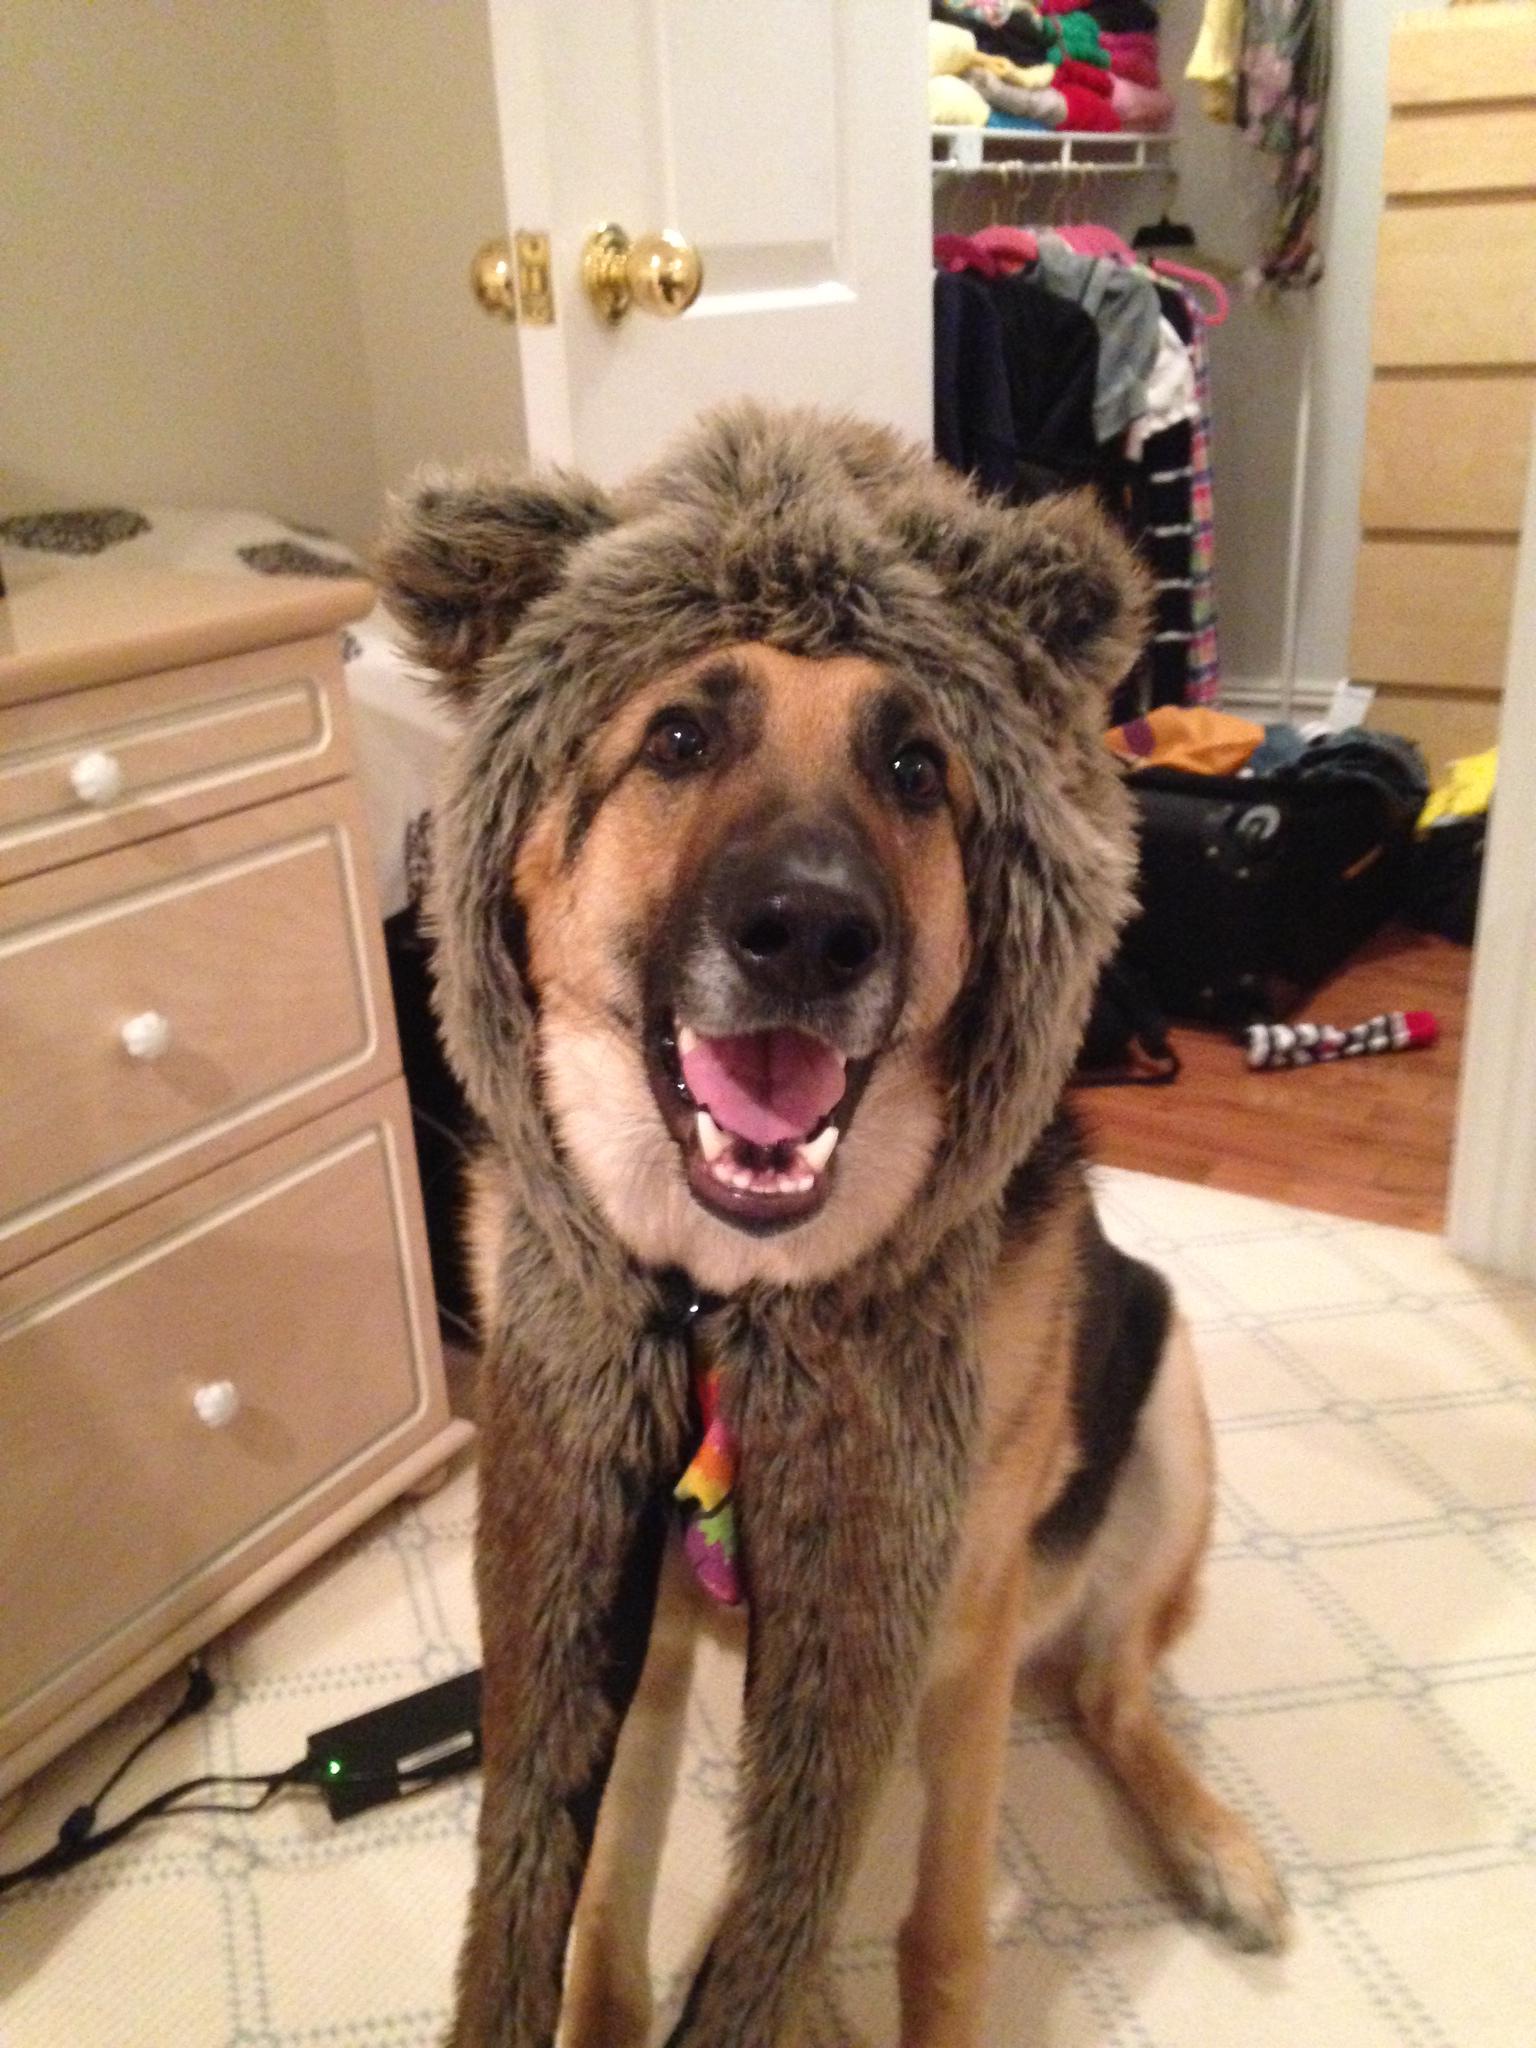 Just a bear shepherd!